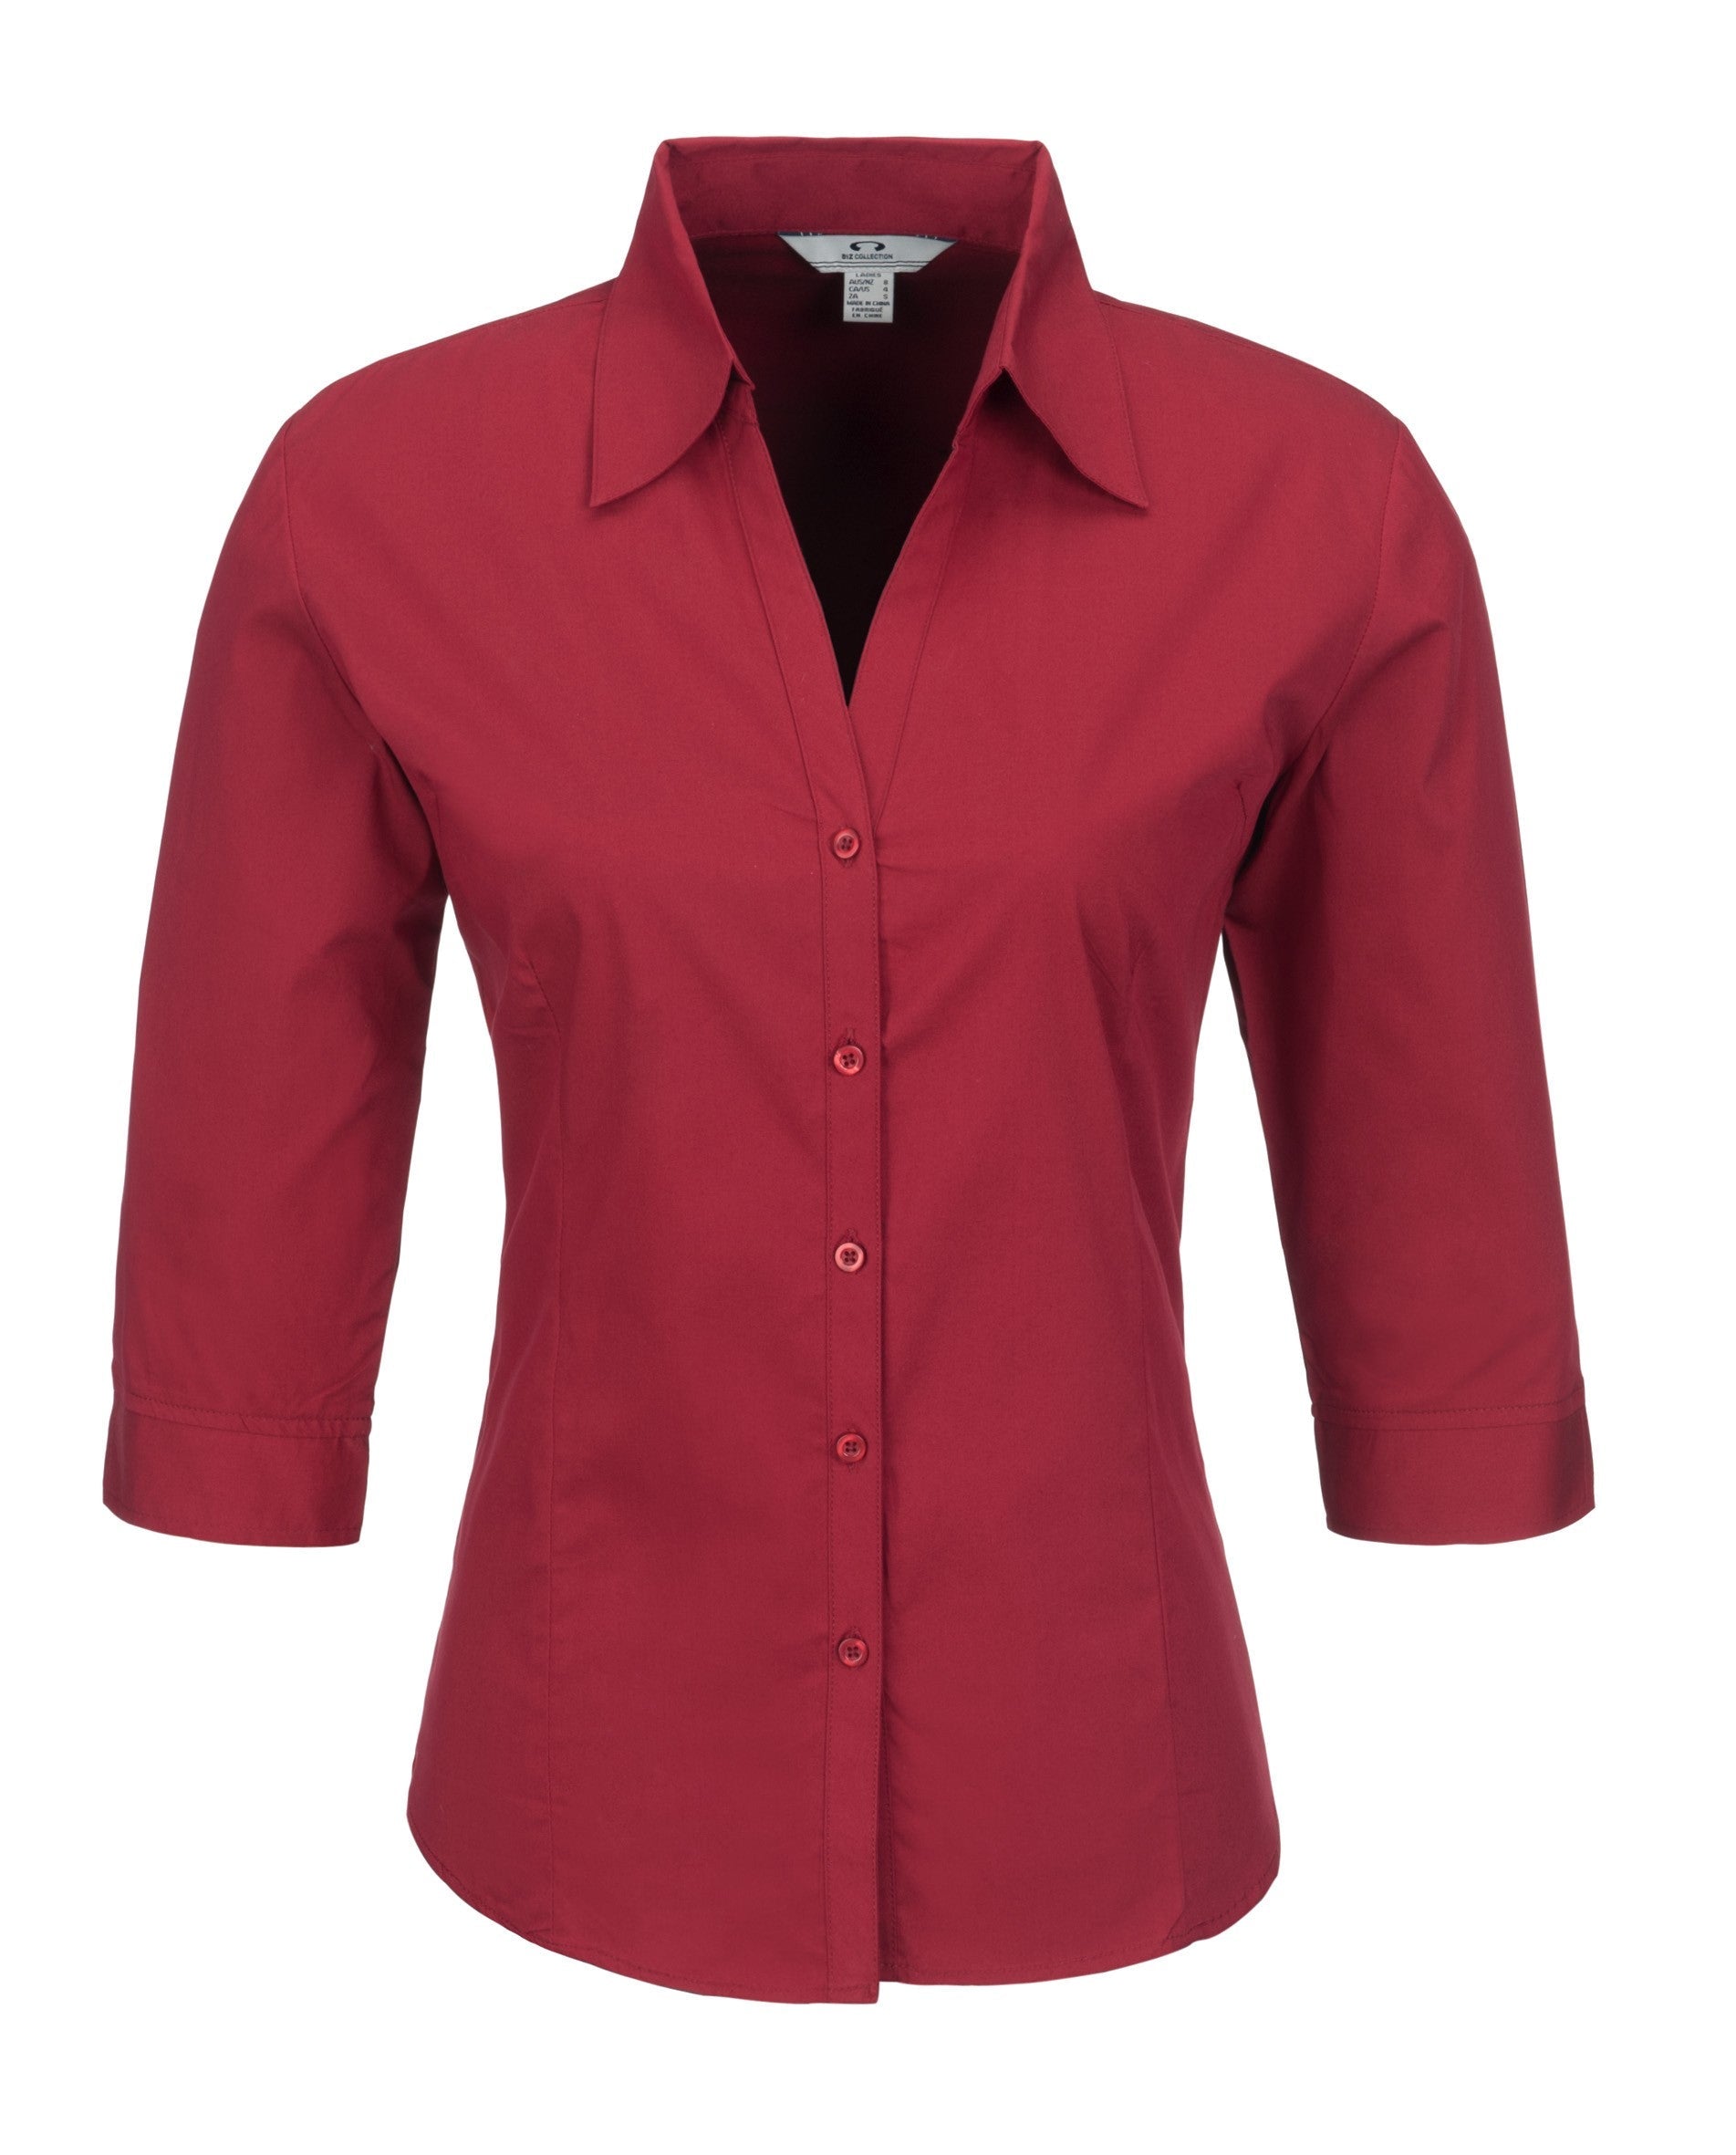 Ladies 3/4 Sleeve Metro Shirt - Black Only-2XL-Red-R